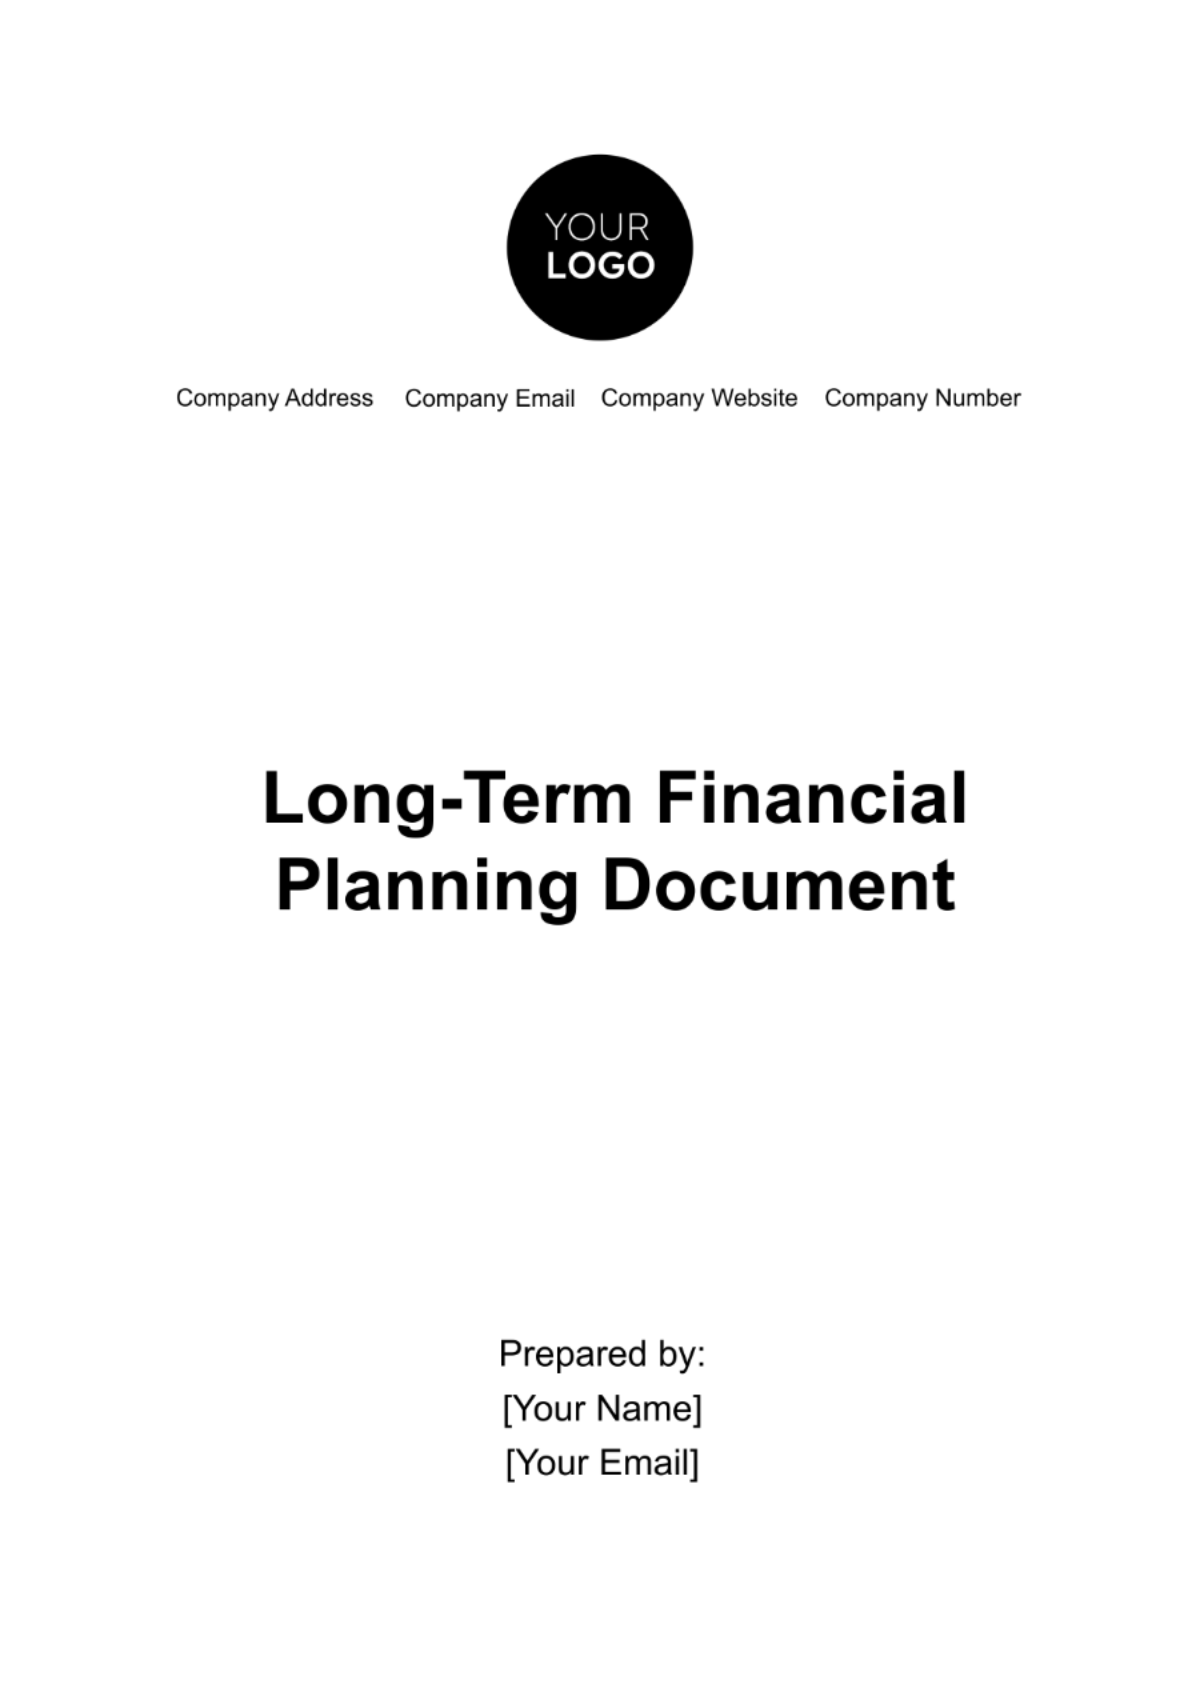 Long-Term Financial Planning Document Template